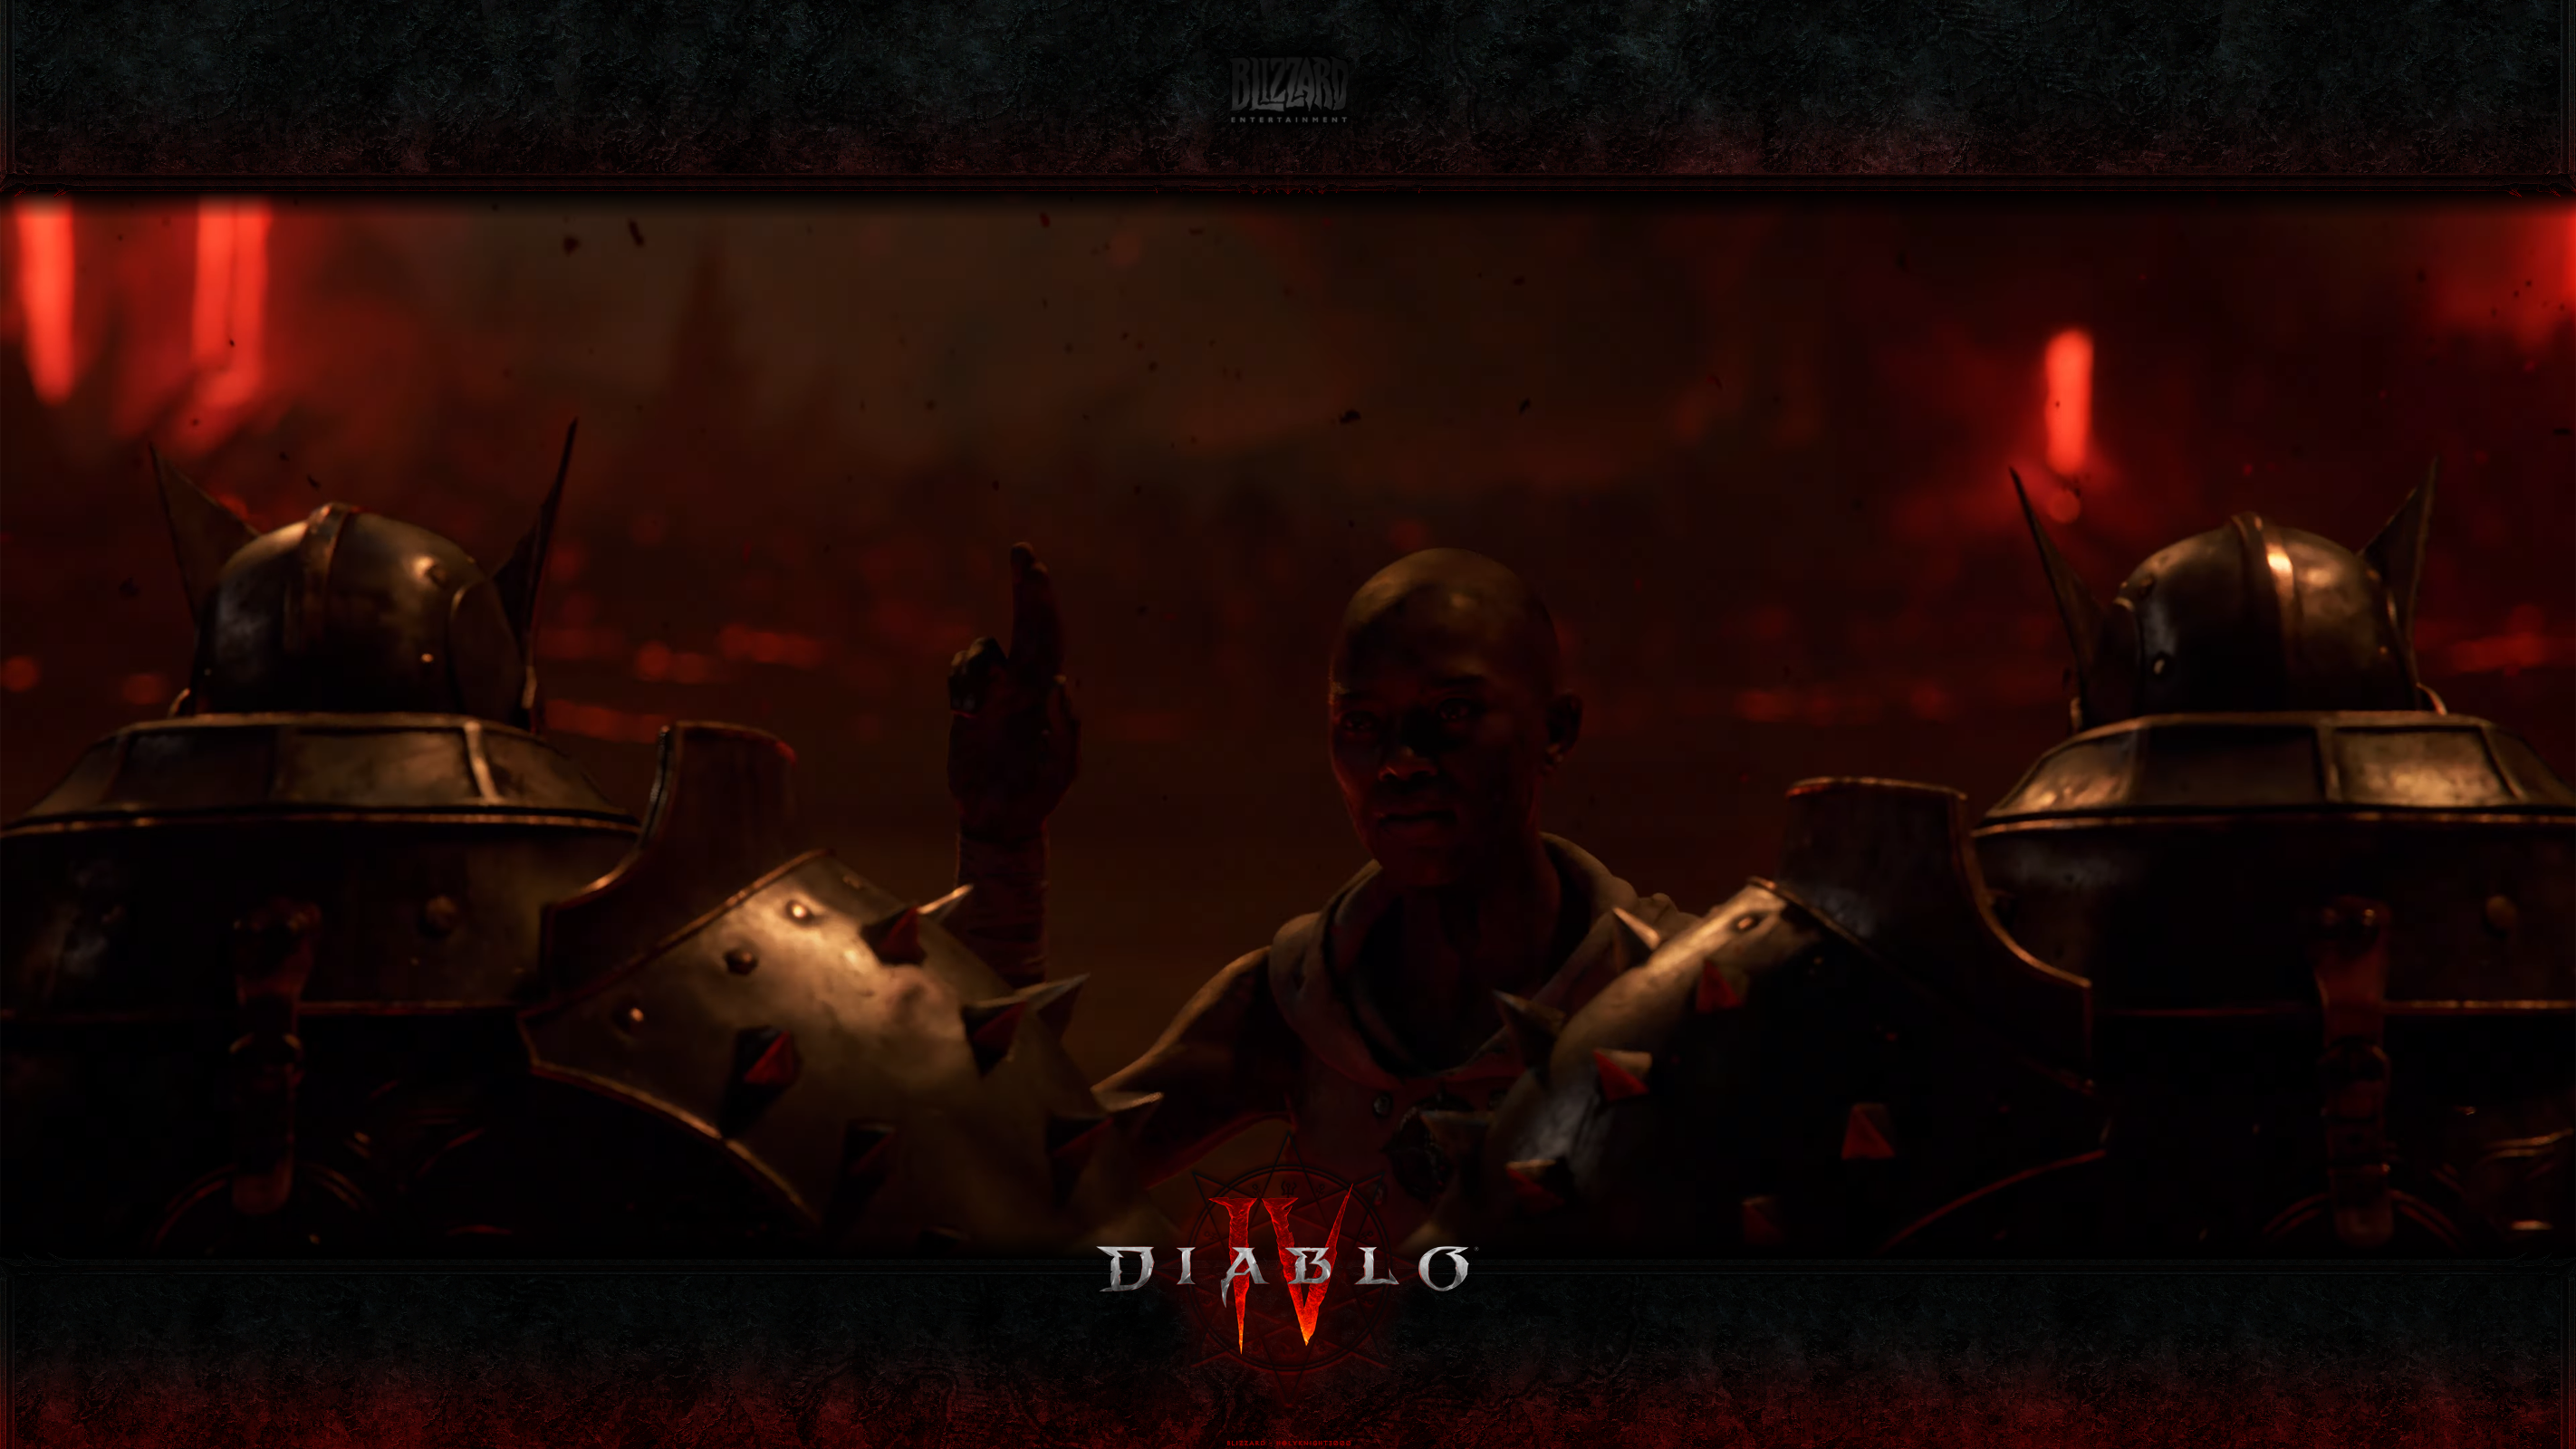 Diablo IV: The Release Date Trailer #28